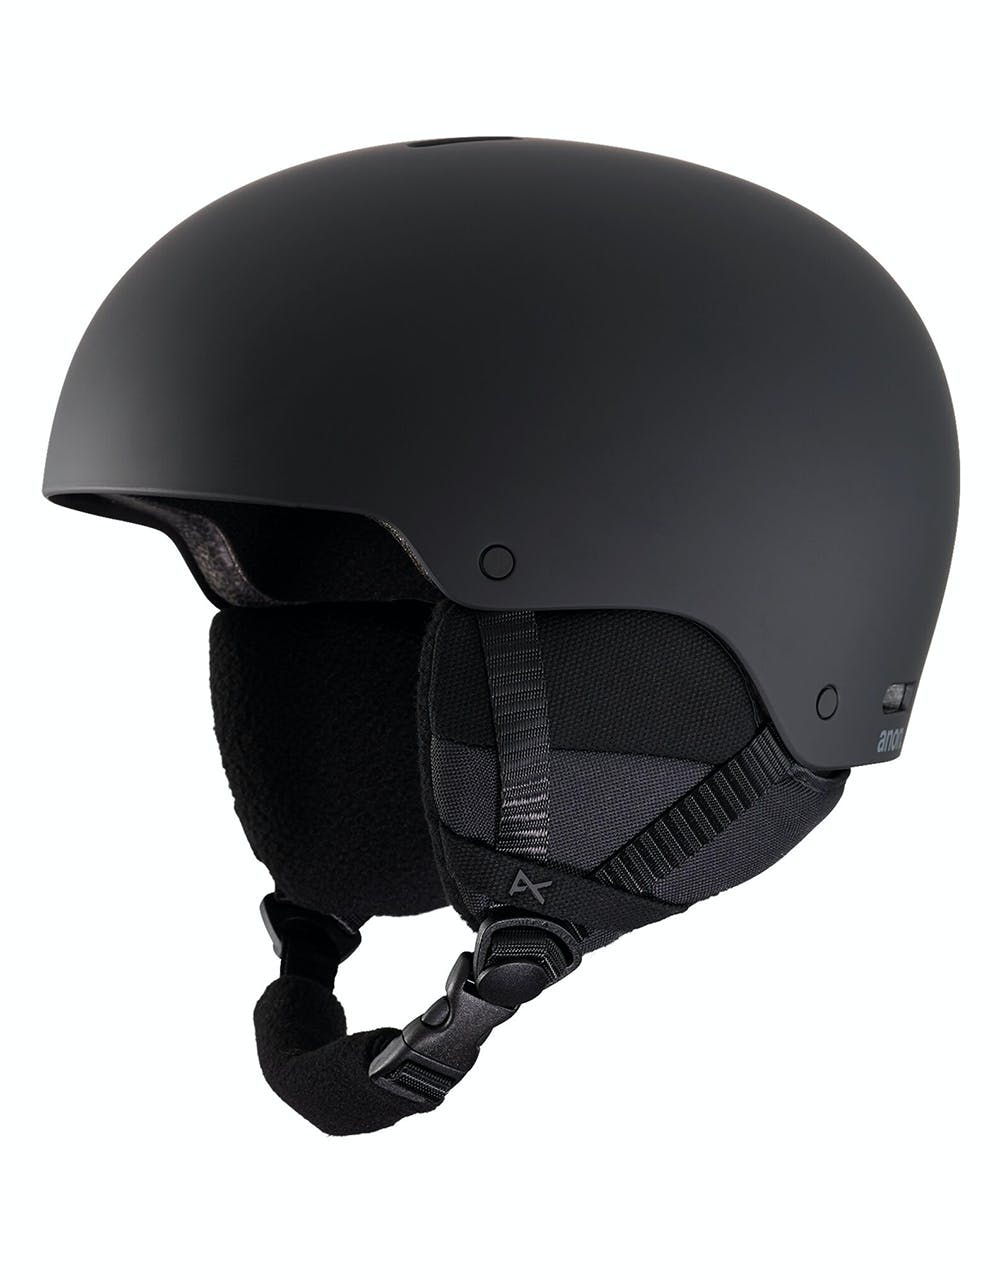 Anon Raider 3 Snowboard Helmet - Black